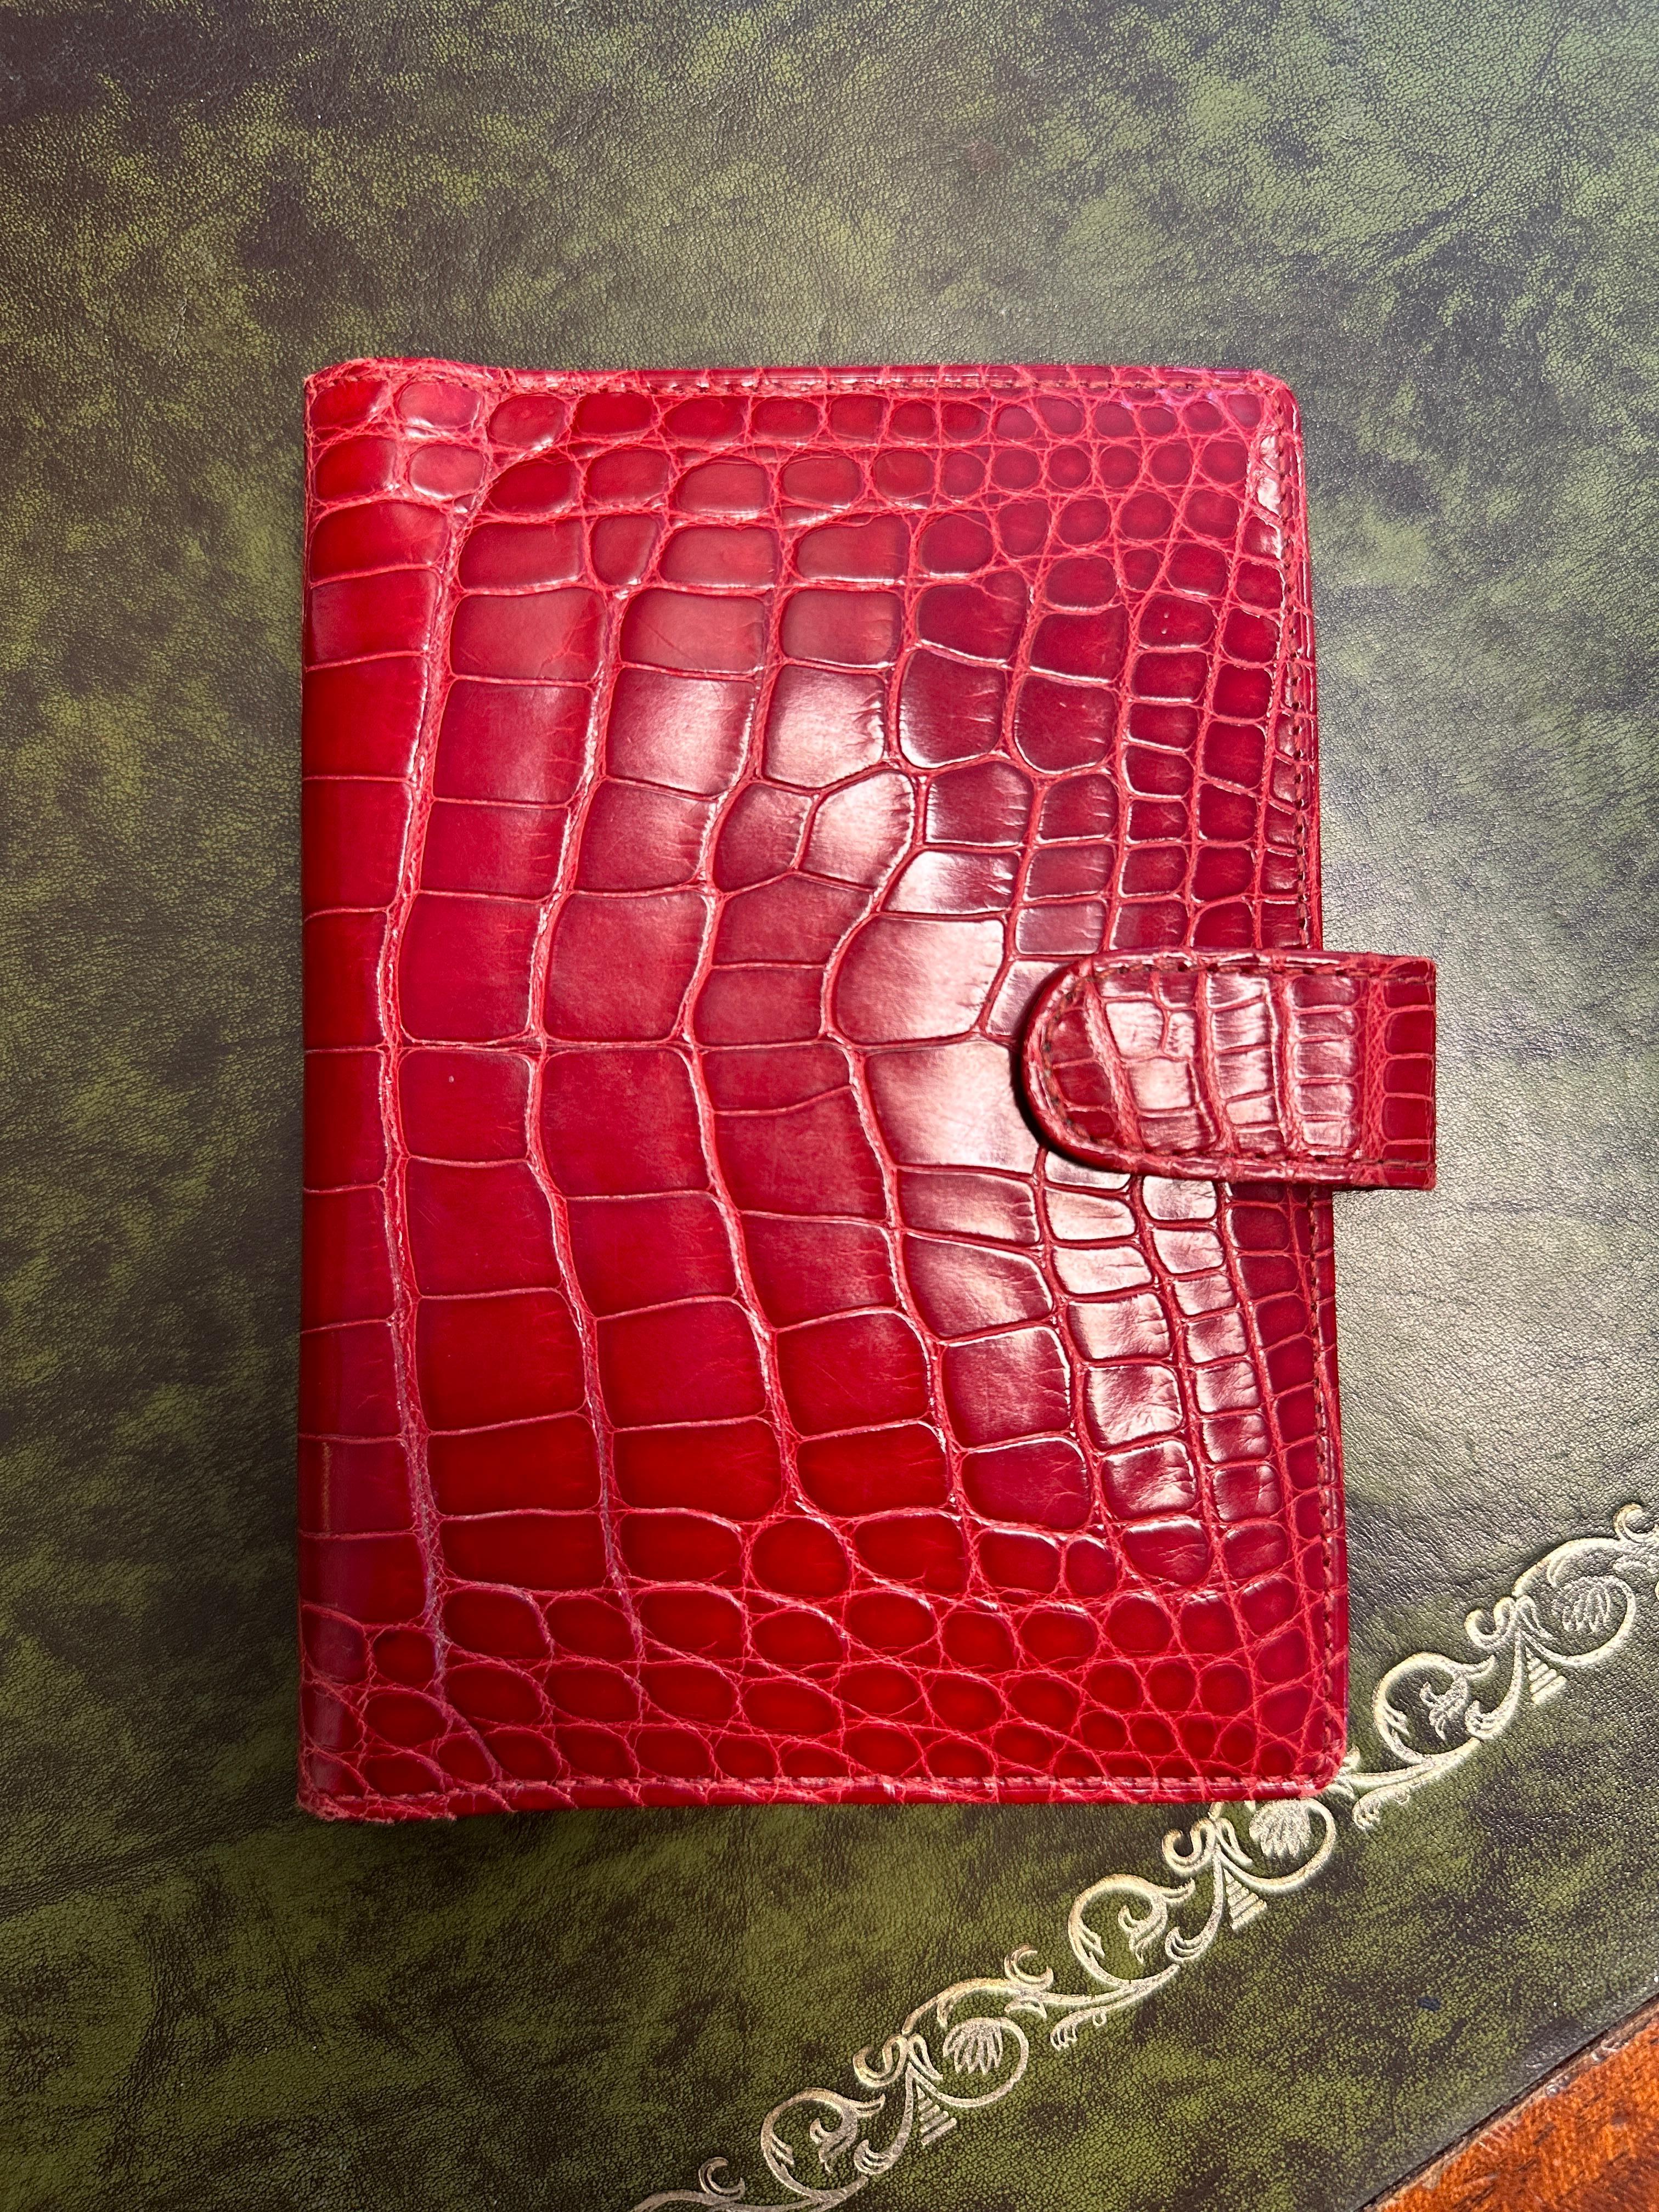 Louis Vuitton Collectable Rare Agenda Calendar Etui Red Crocodile Leather.

Good condition. 100% Authentic.
